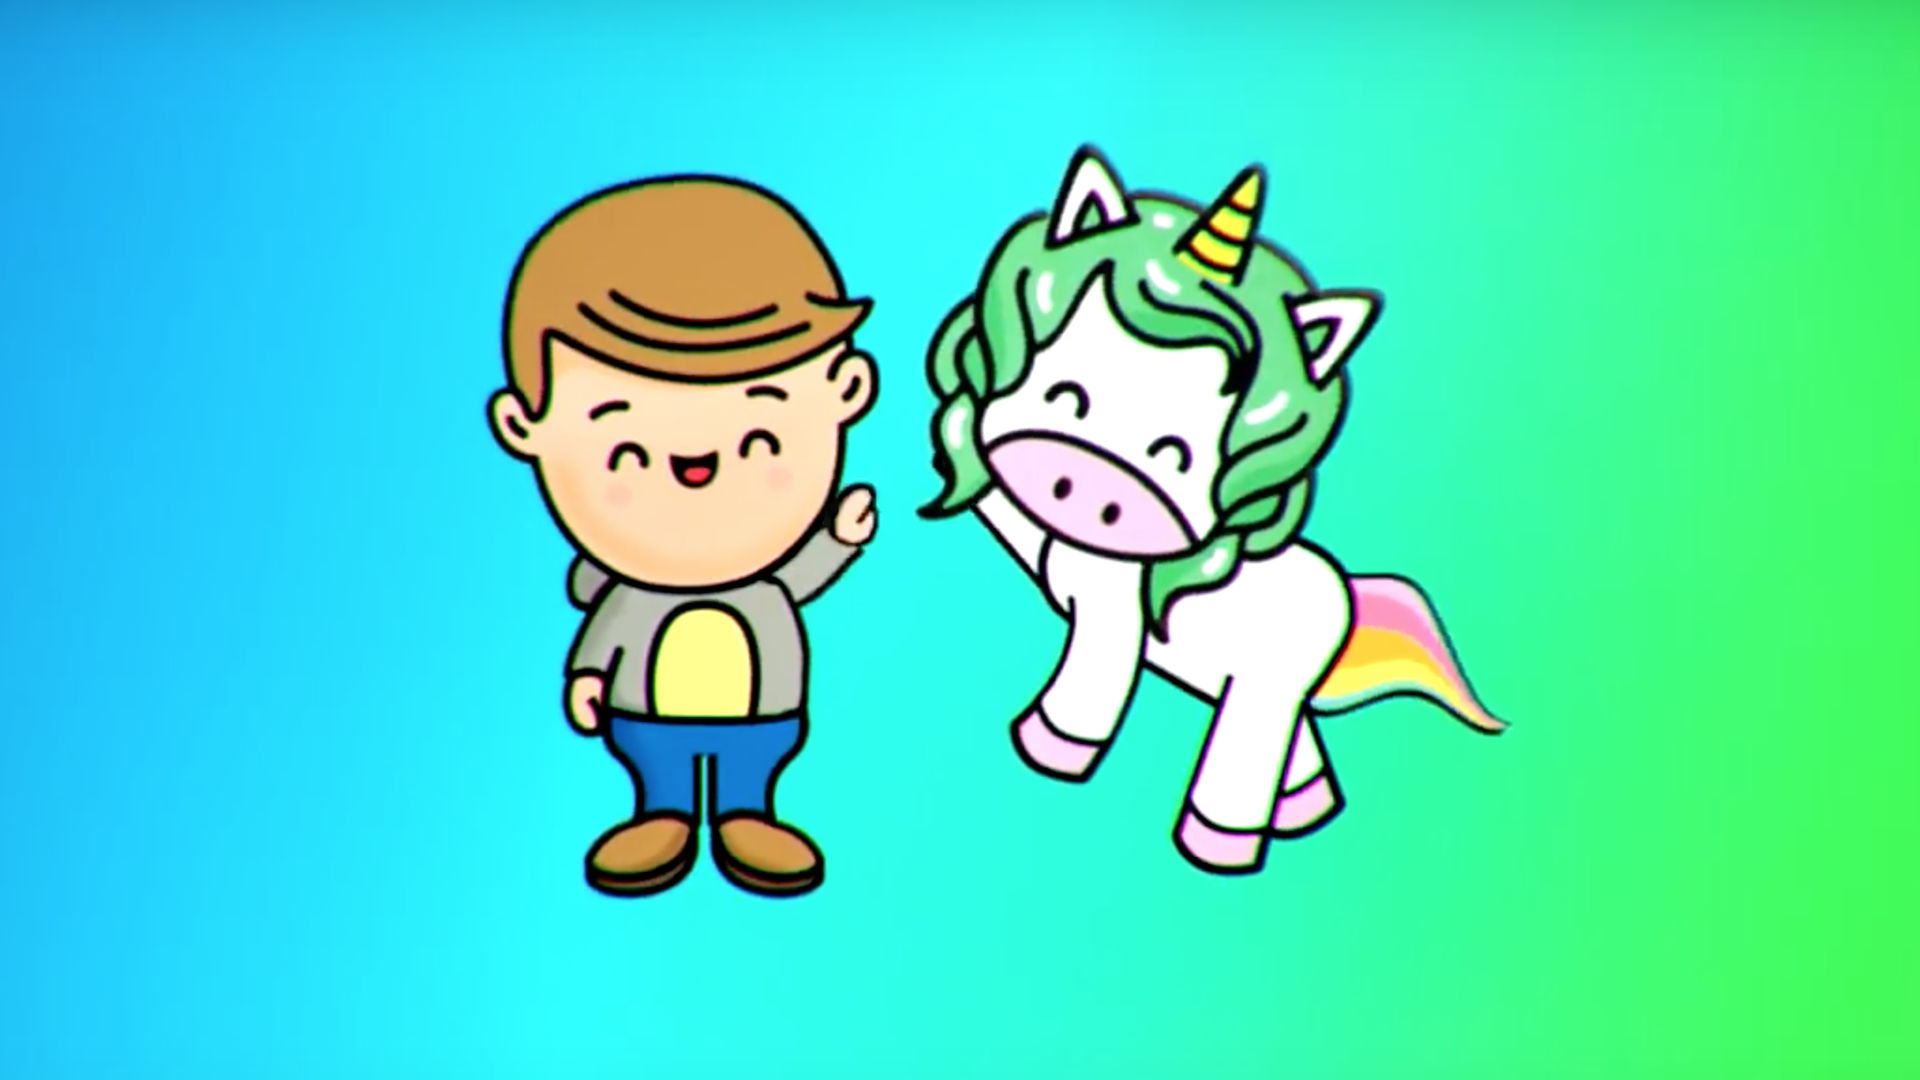 Dangthatsalongname and a unicorn